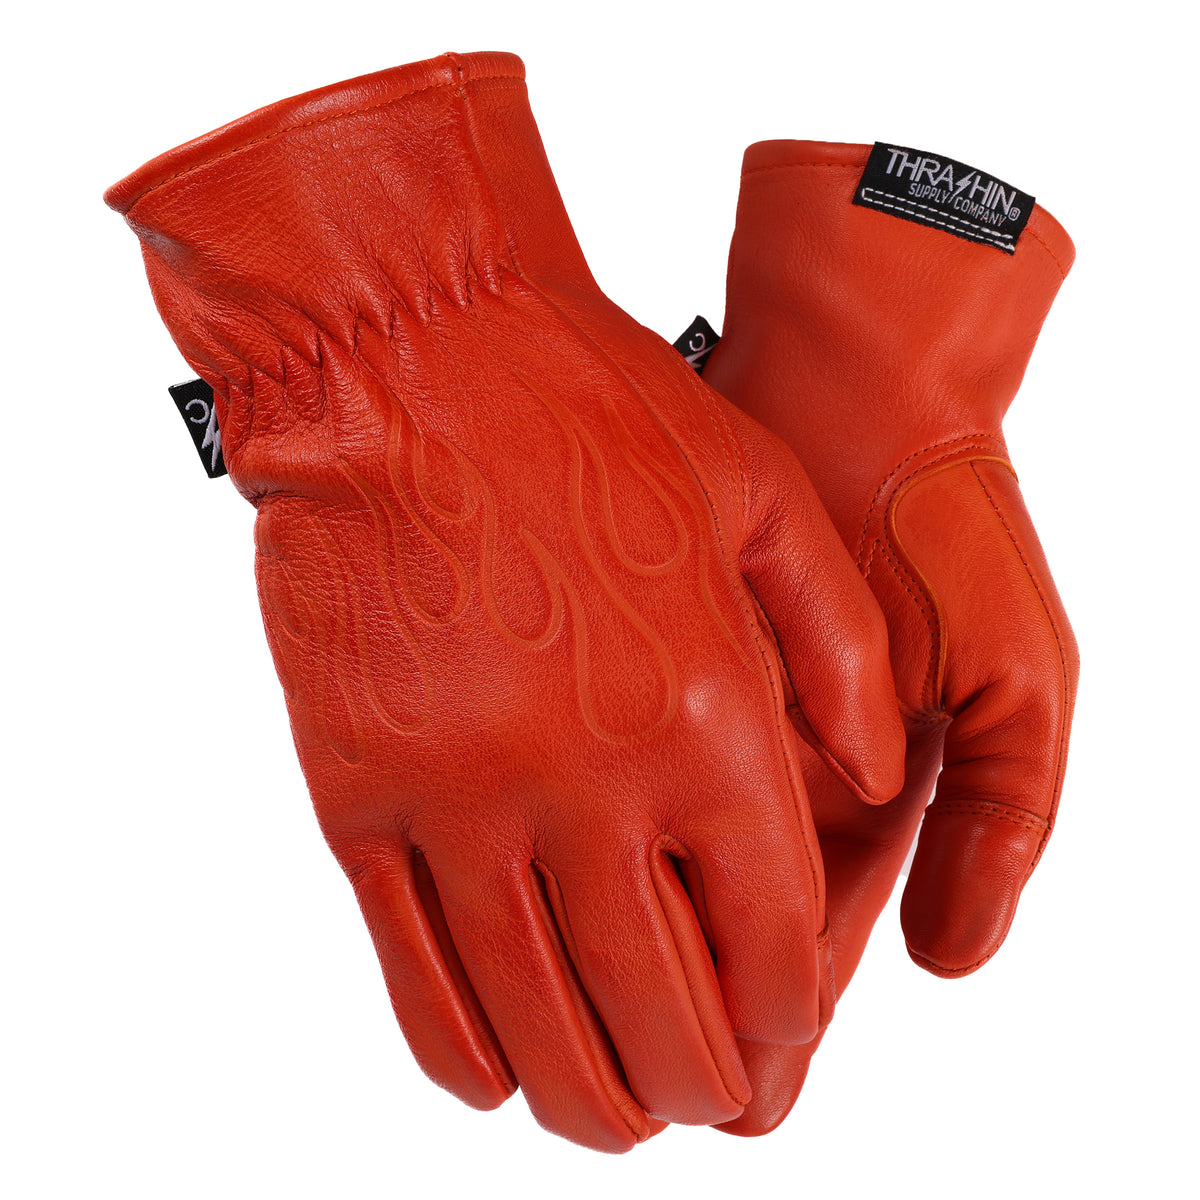 Roper Glove - Leather - Orange